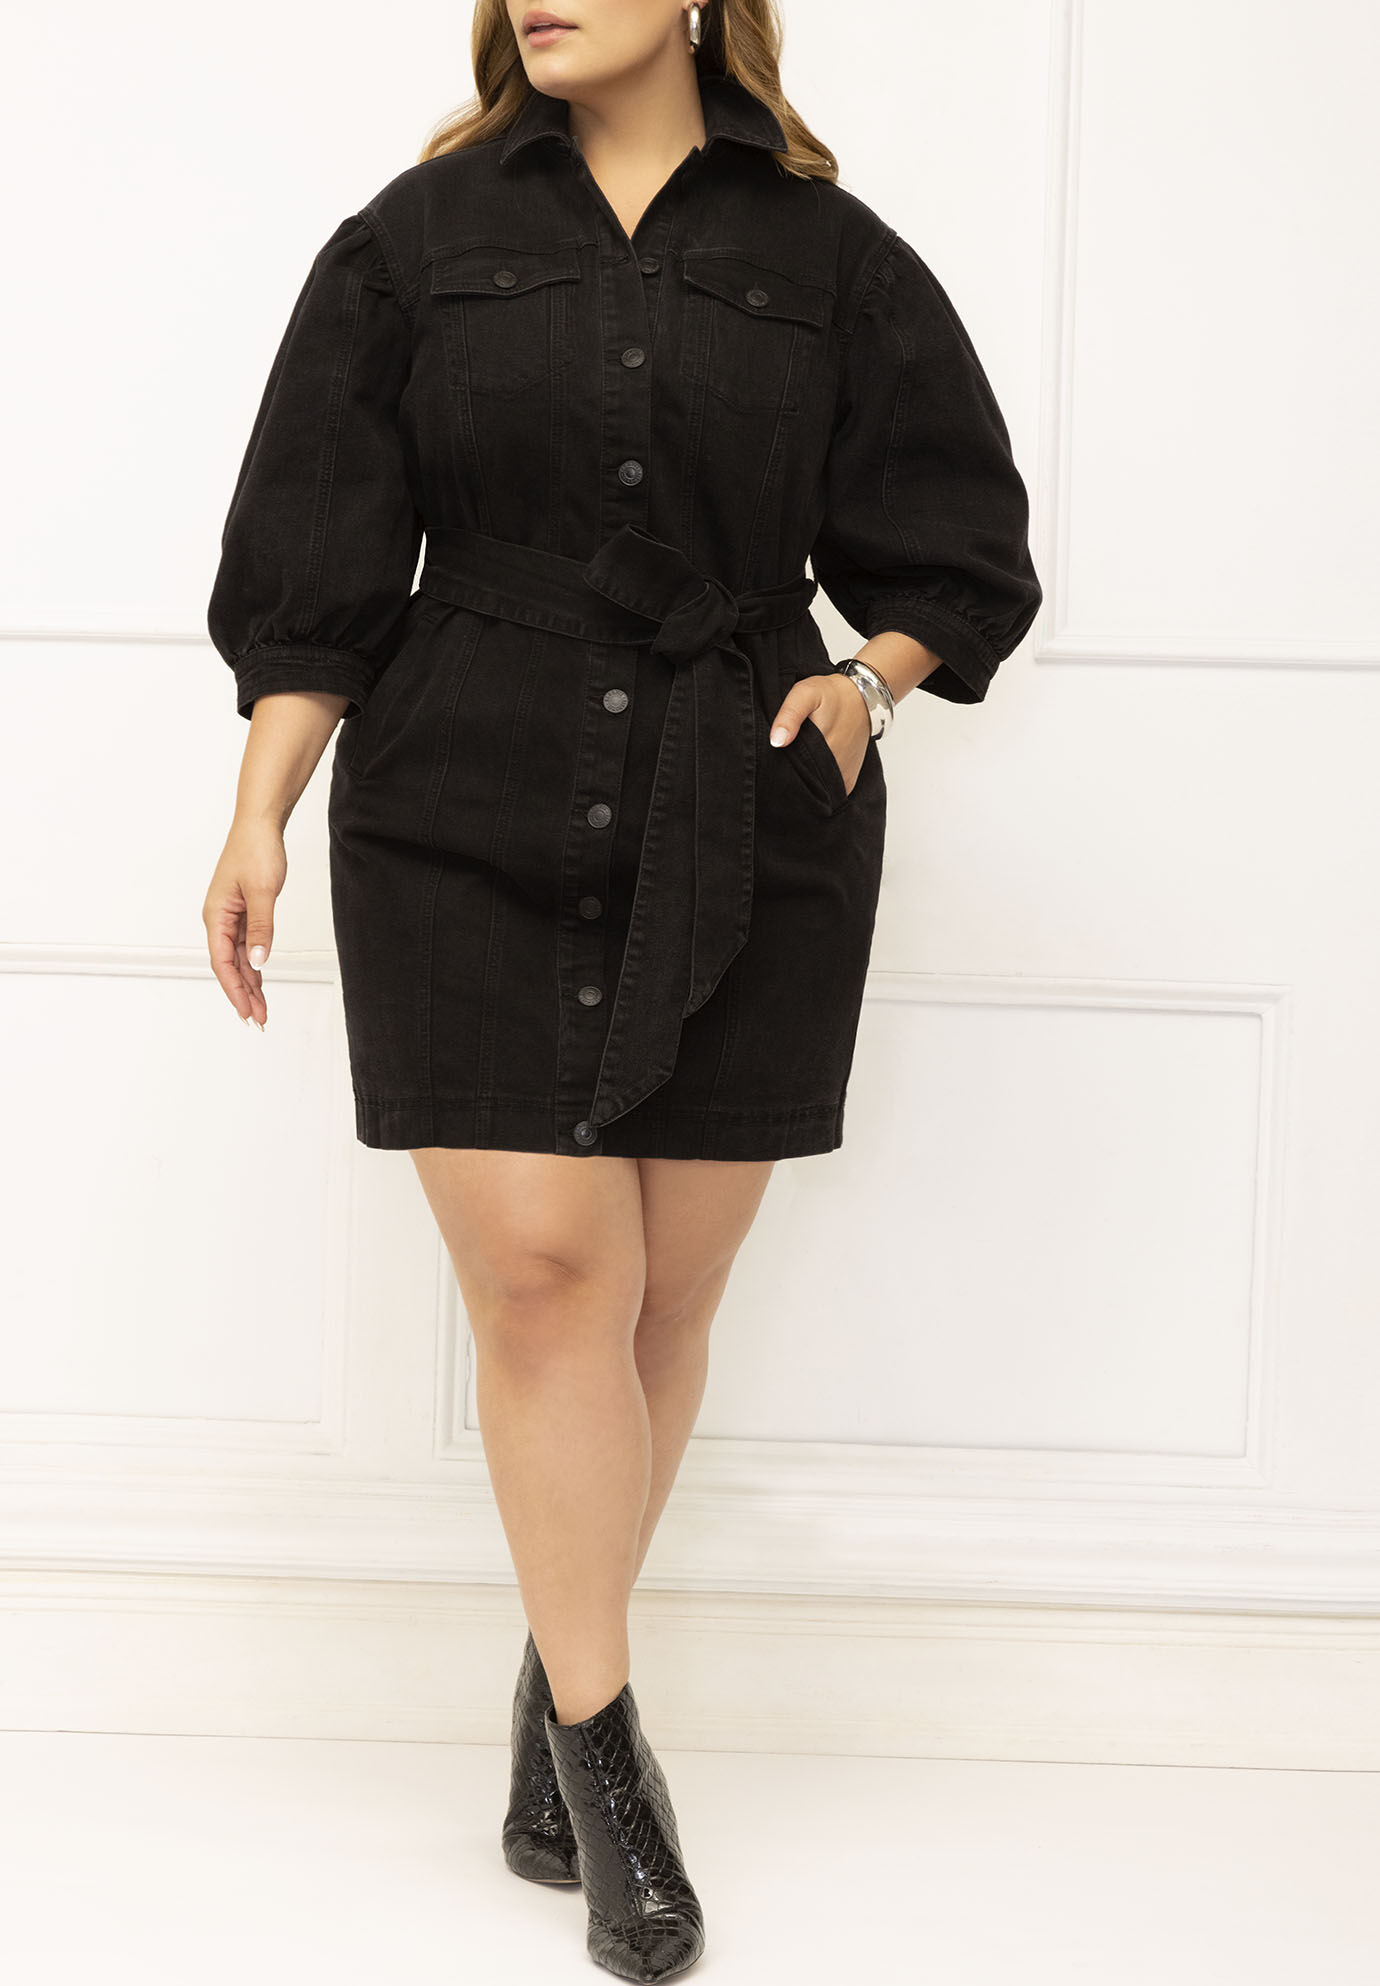 ASOS DESIGN coated denim short sleeve shirt dress in black | ASOS